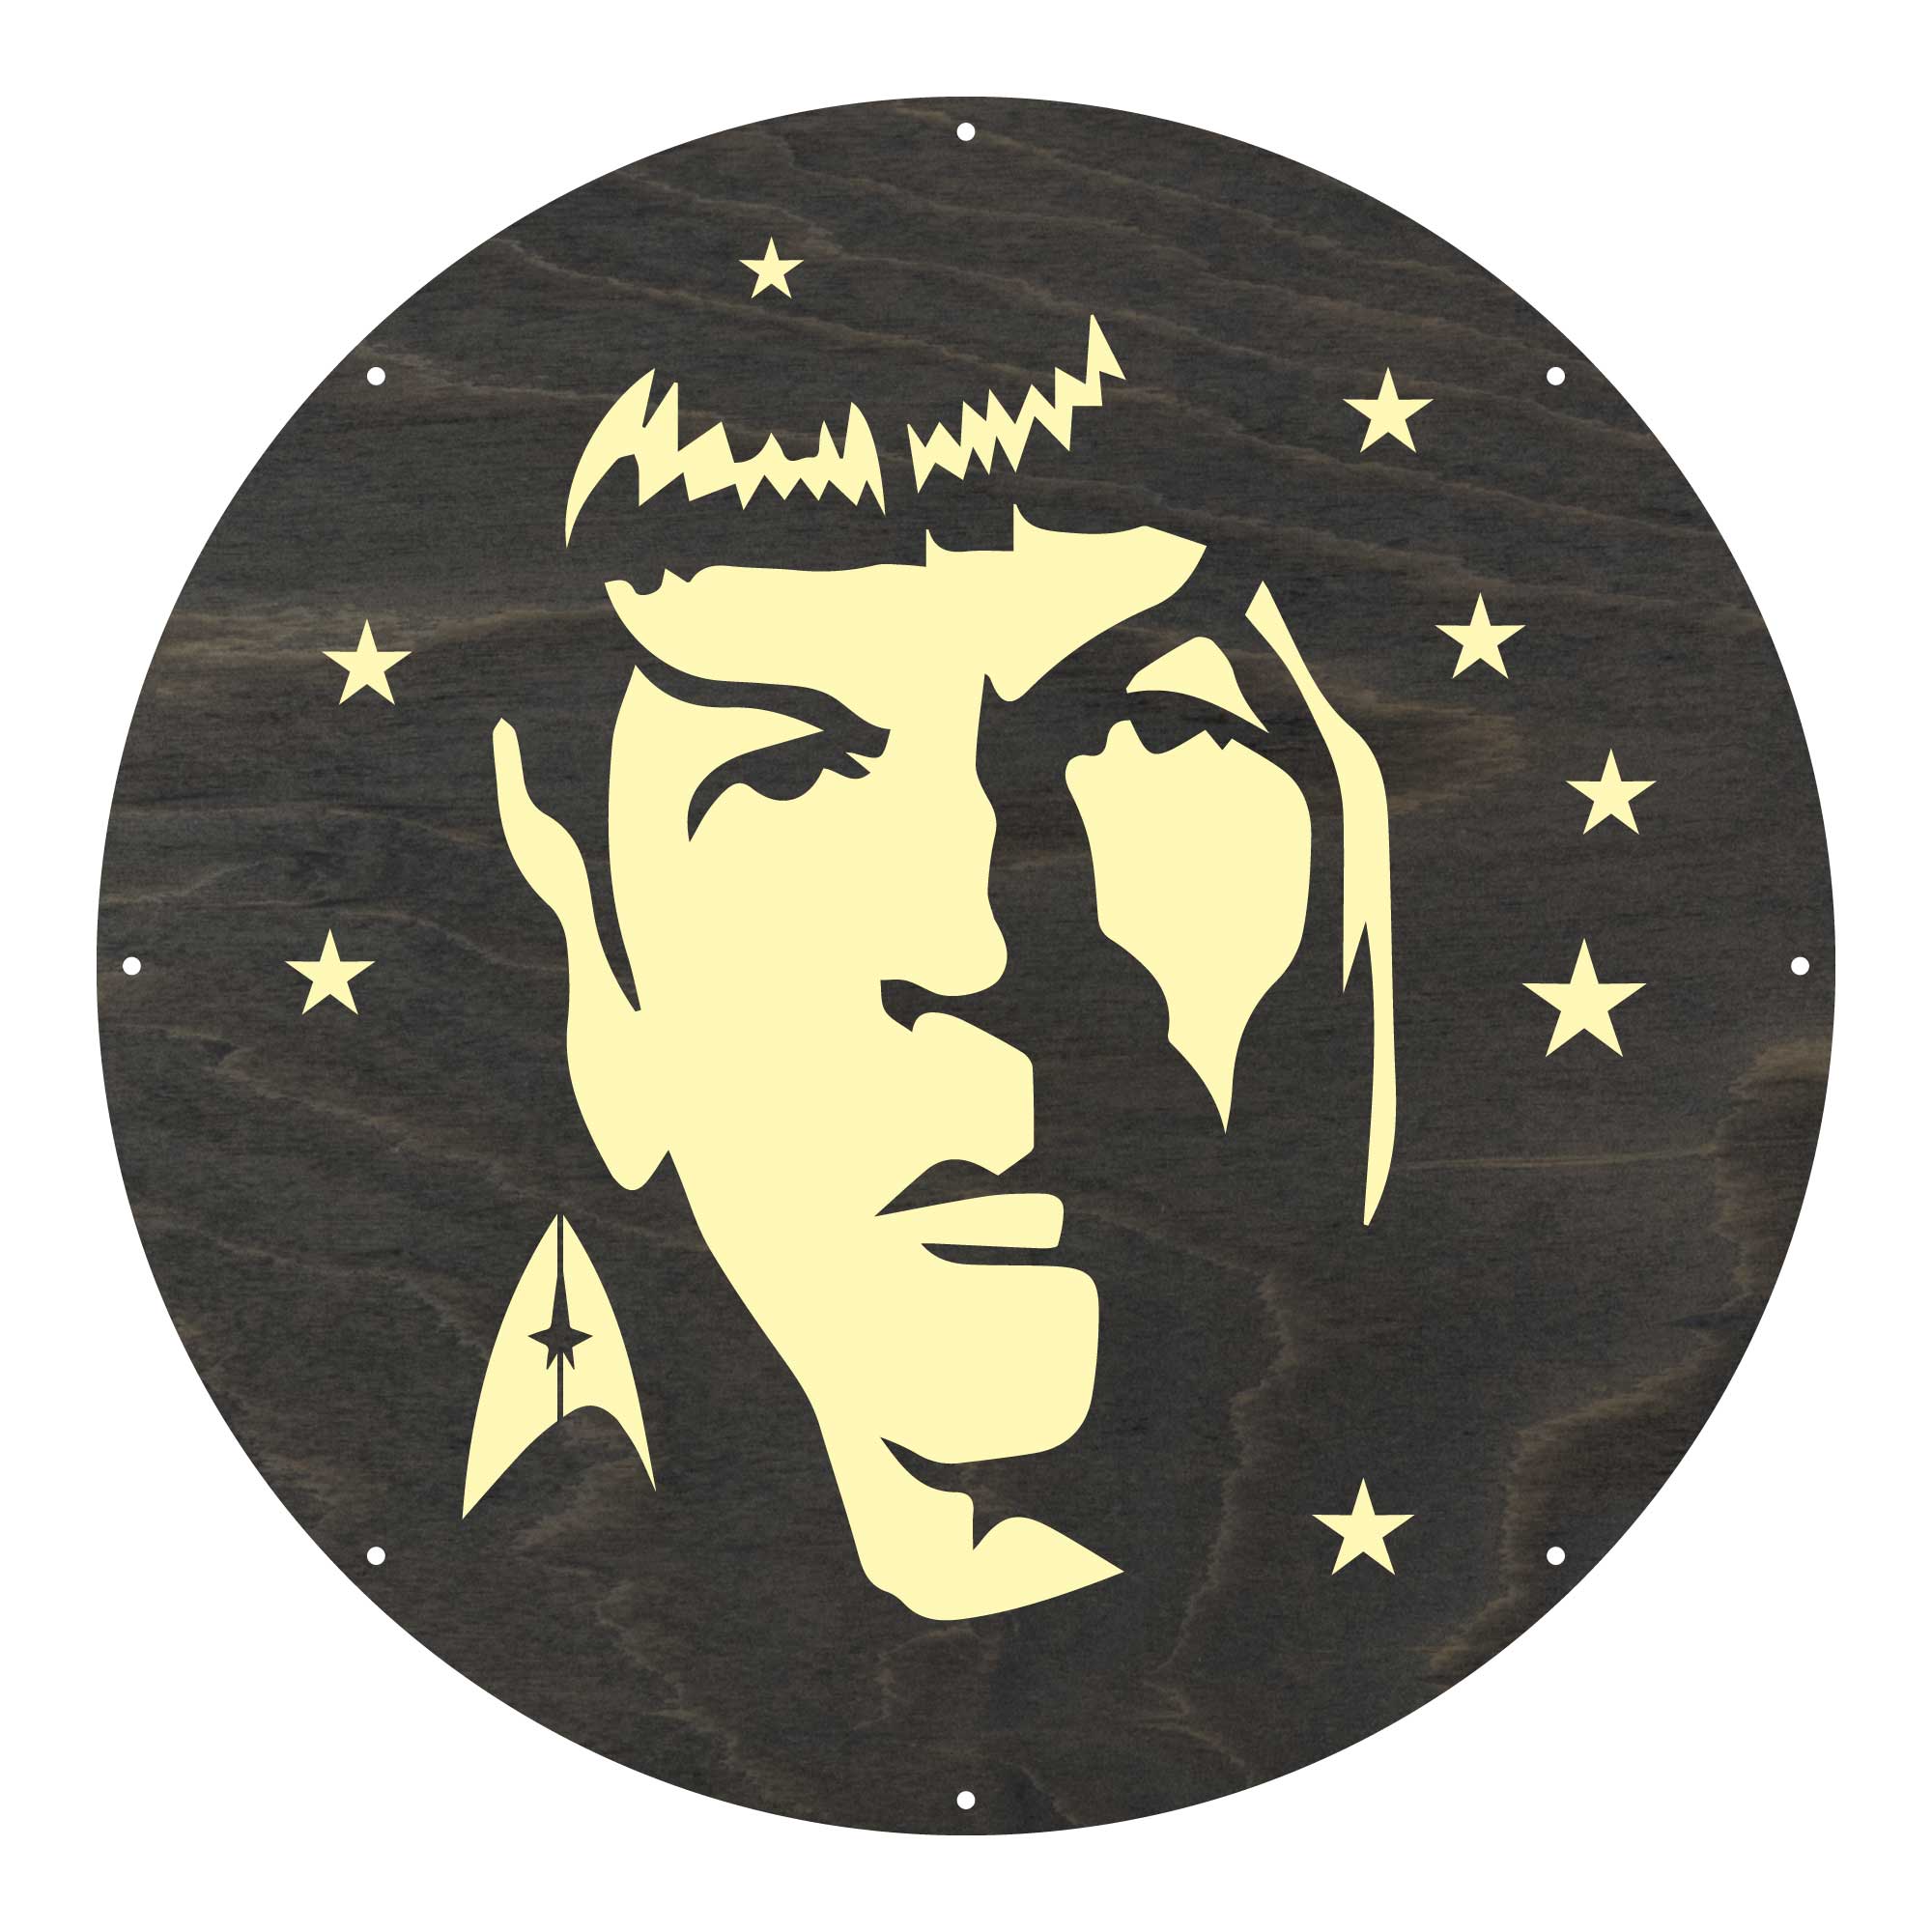 Motivscheibe "Spock" | Marolight